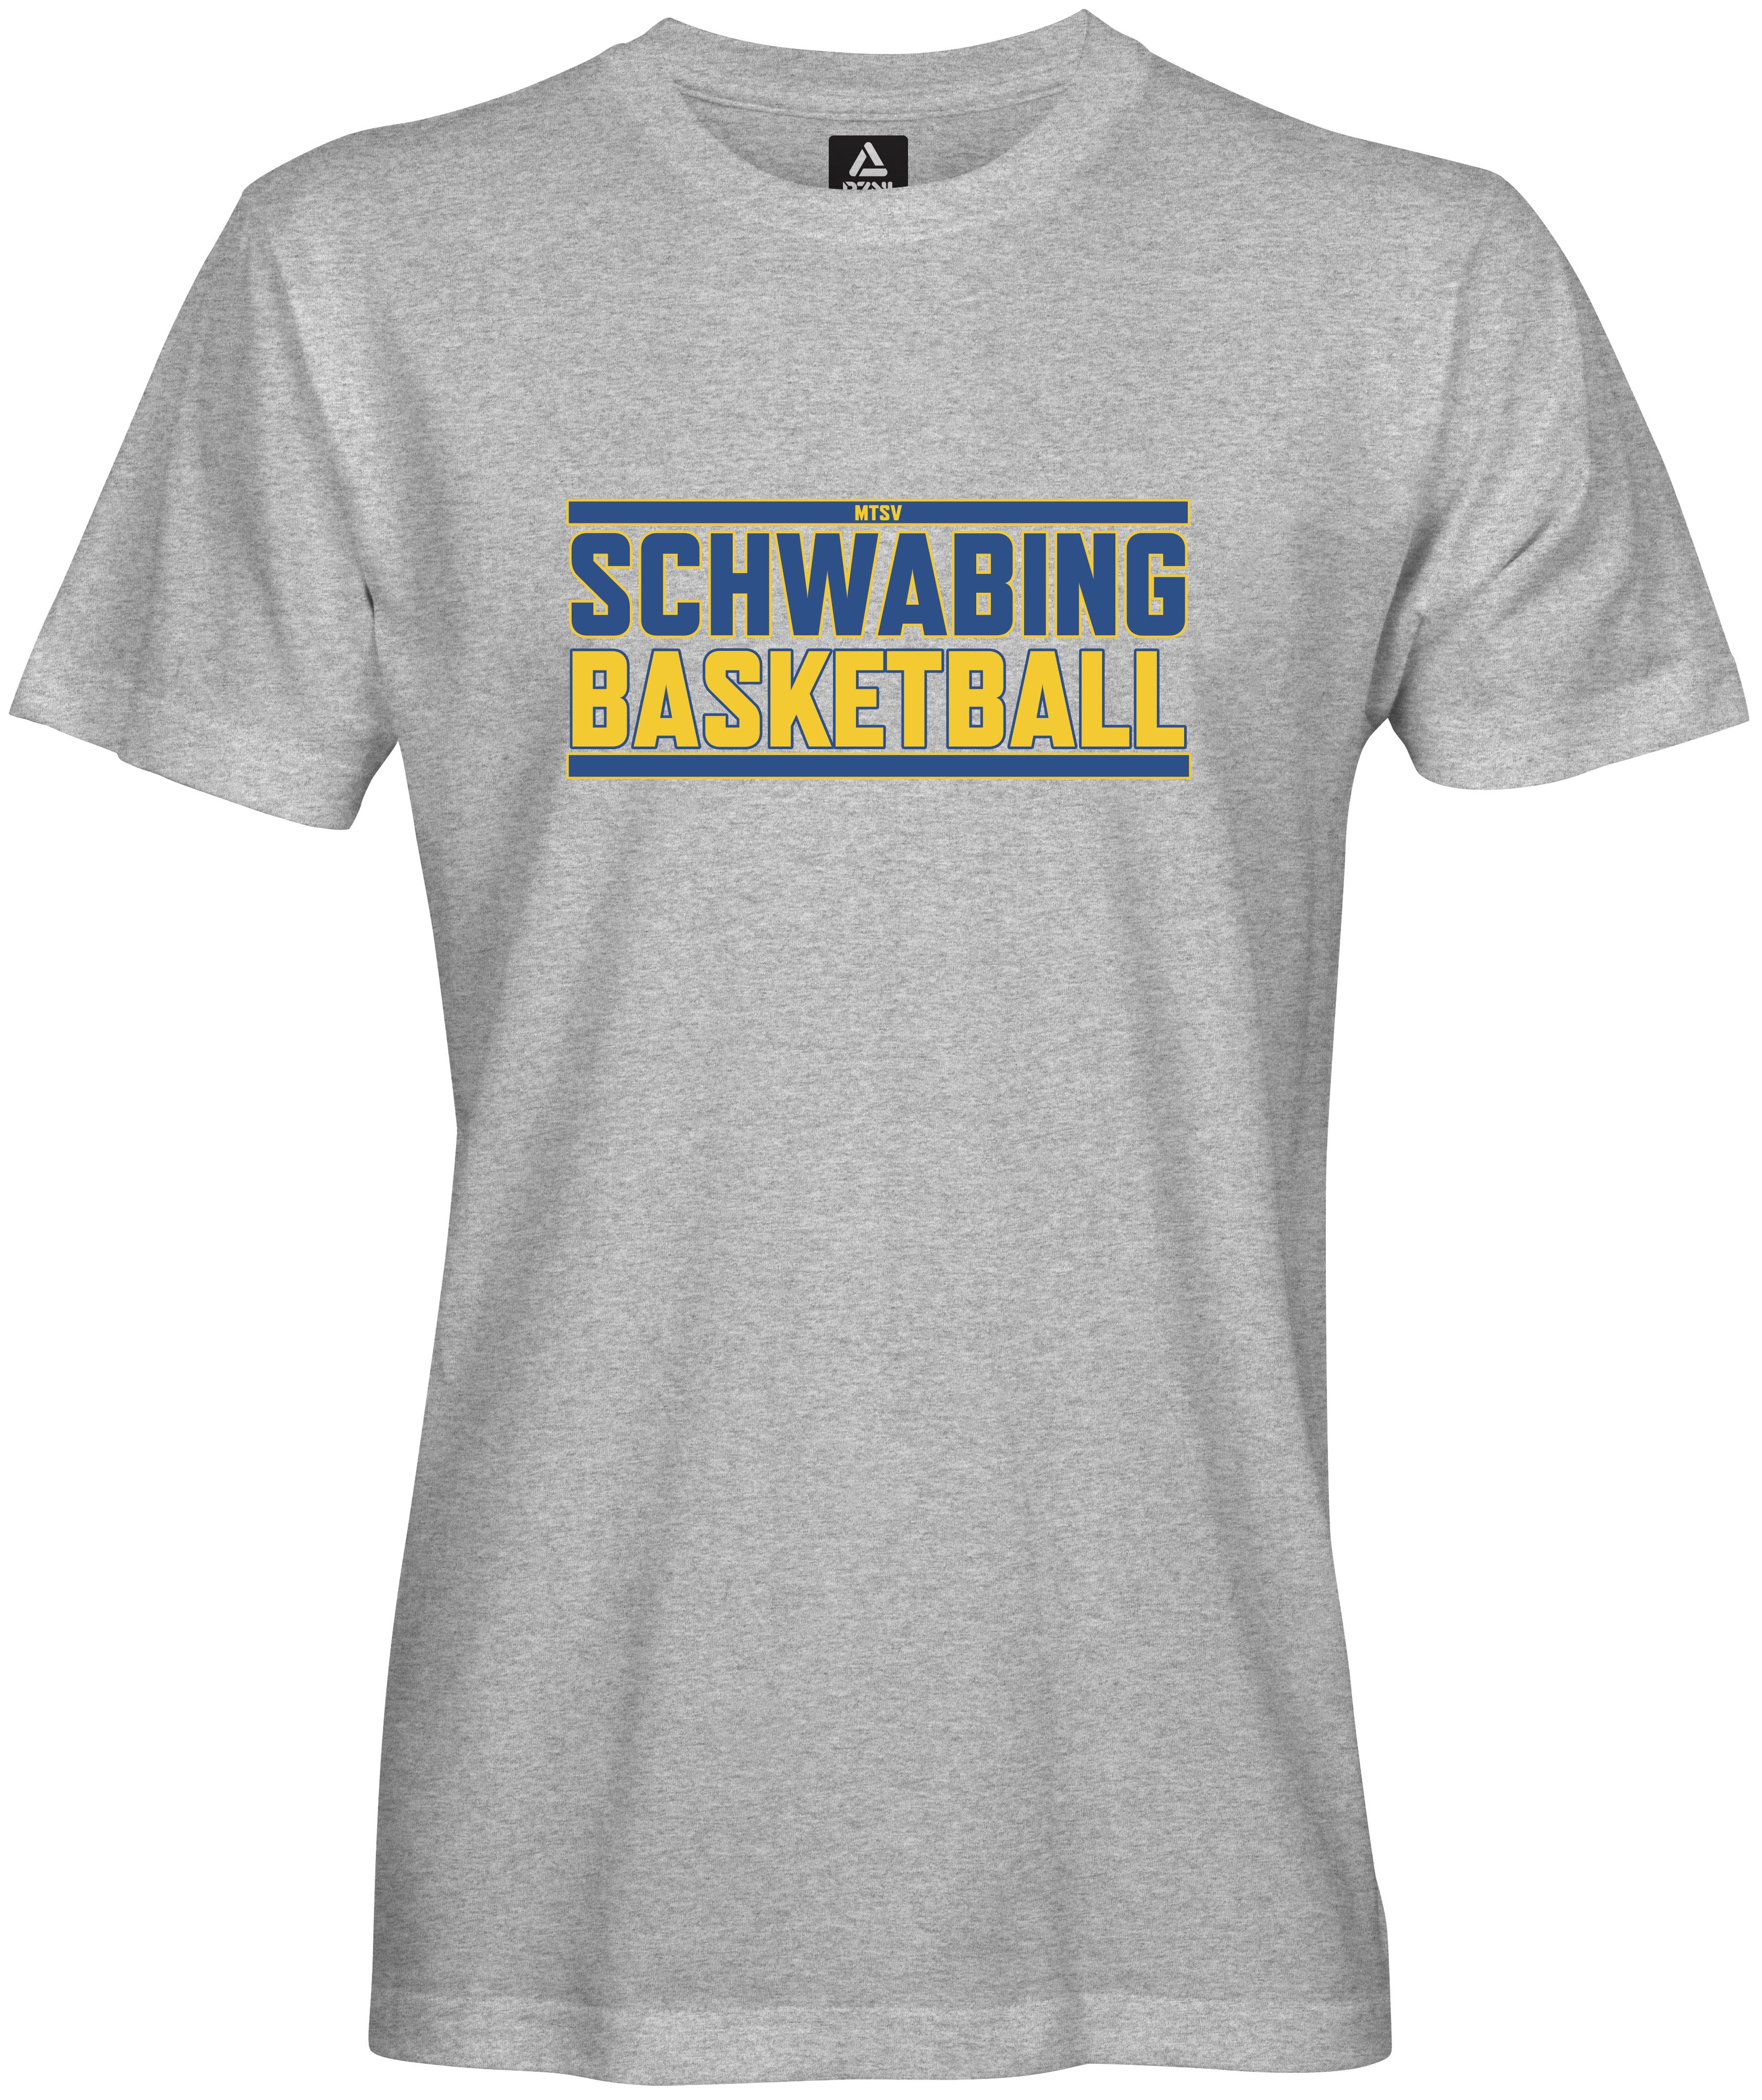 Schwabing Basketball T-Shirt